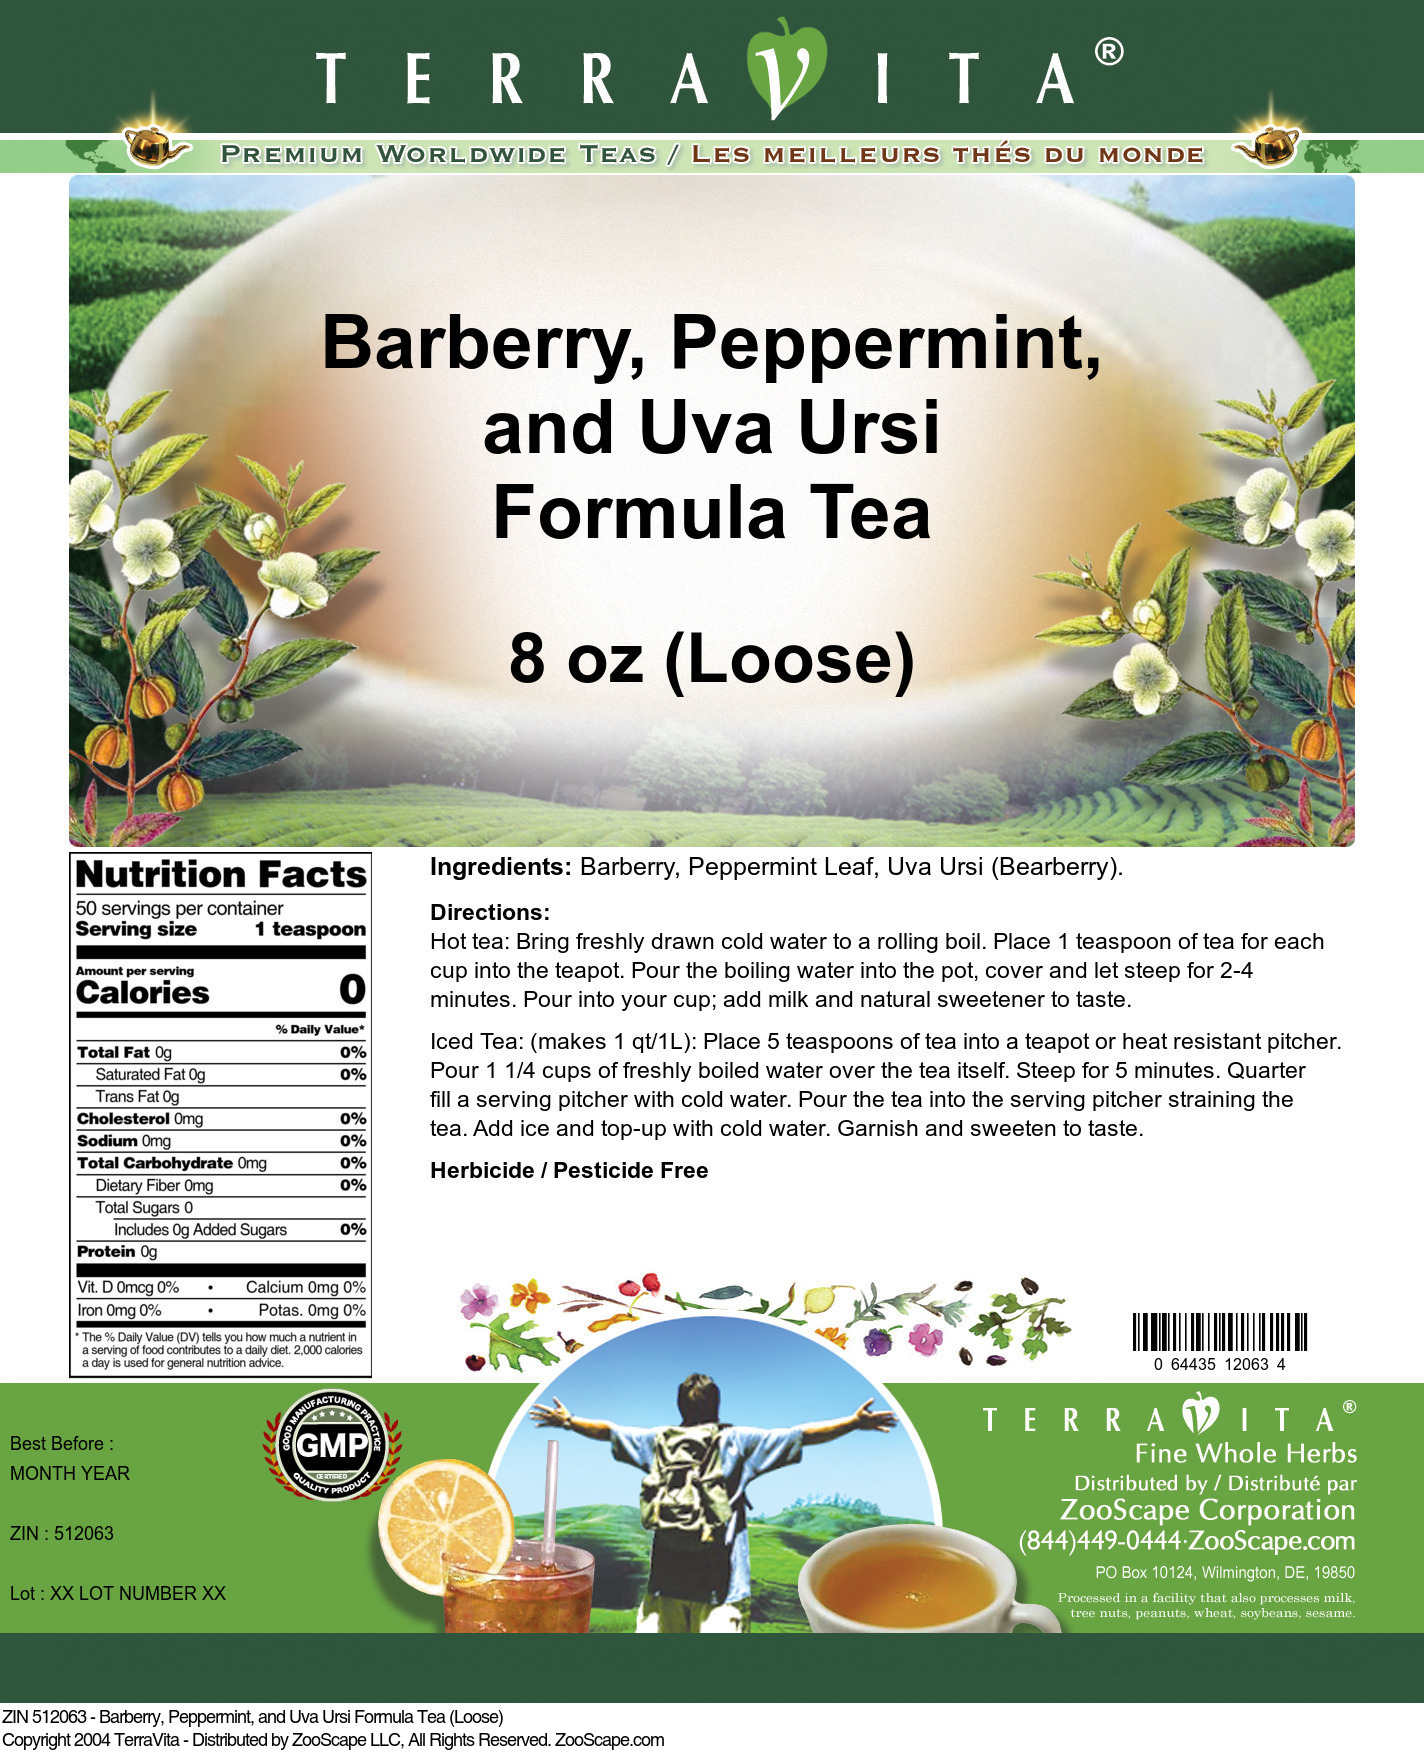 Barberry, Peppermint, and Uva Ursi Formula Tea (Loose) - Label